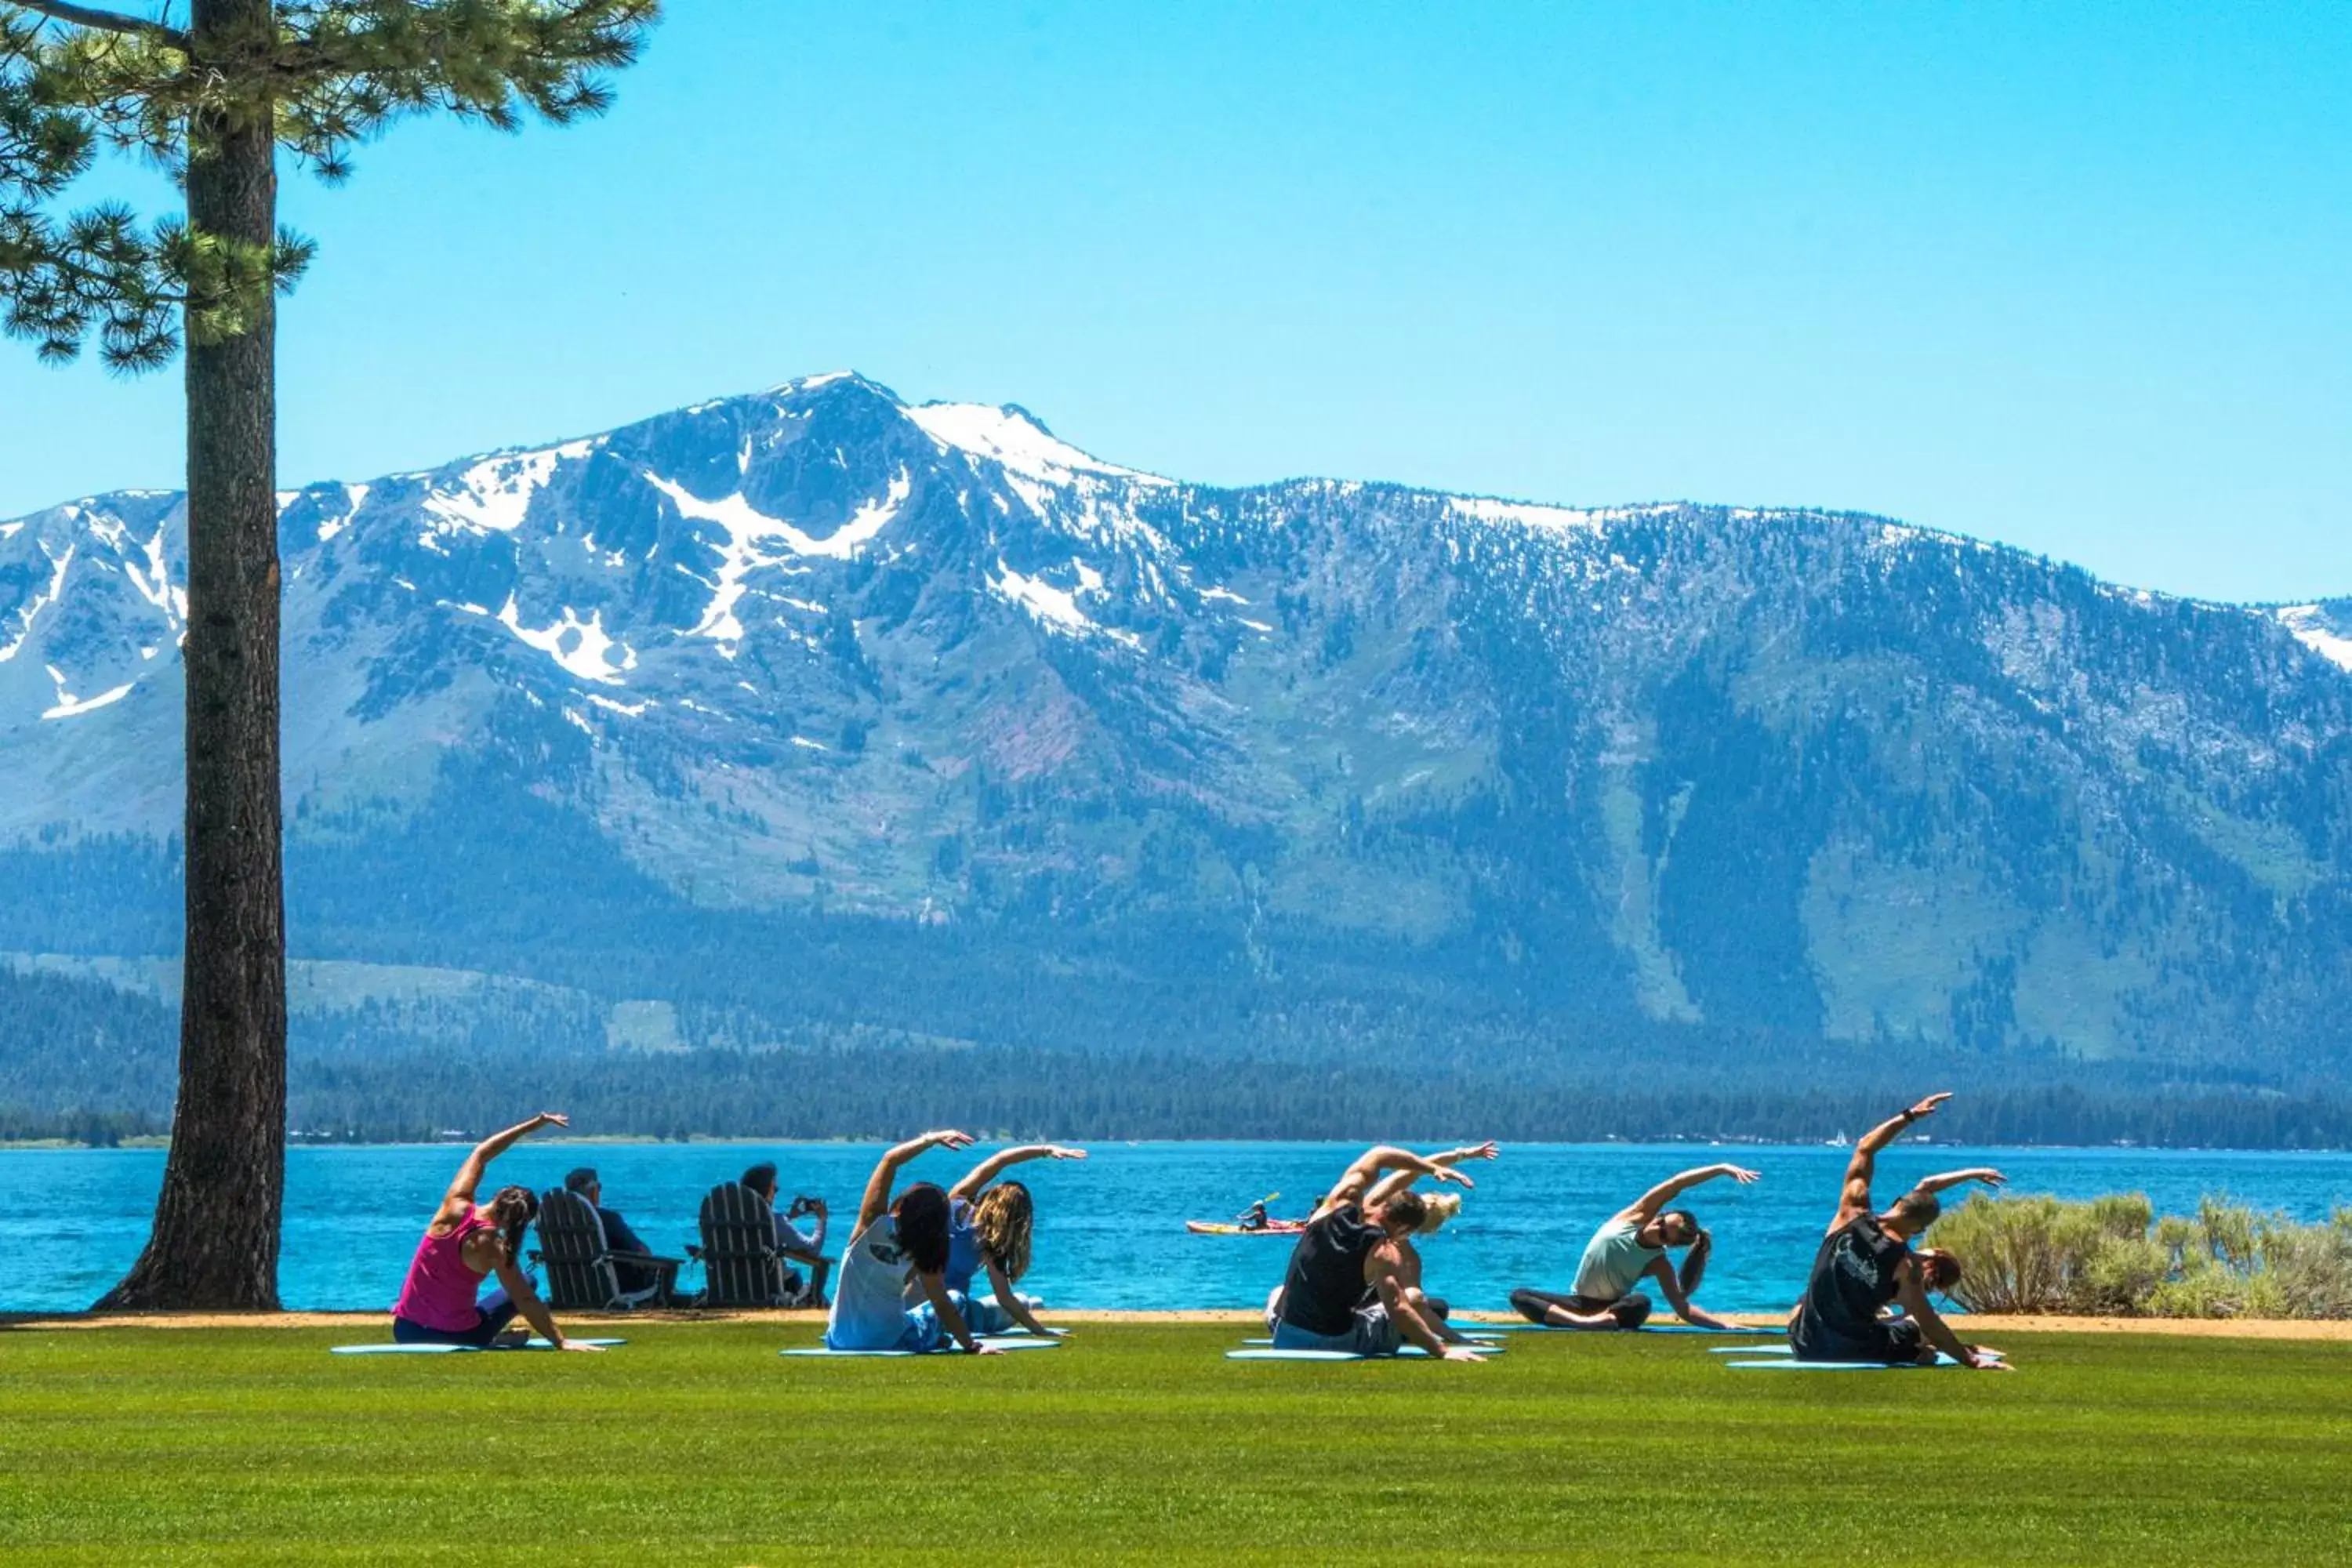 Fitness centre/facilities in Edgewood Tahoe Resort